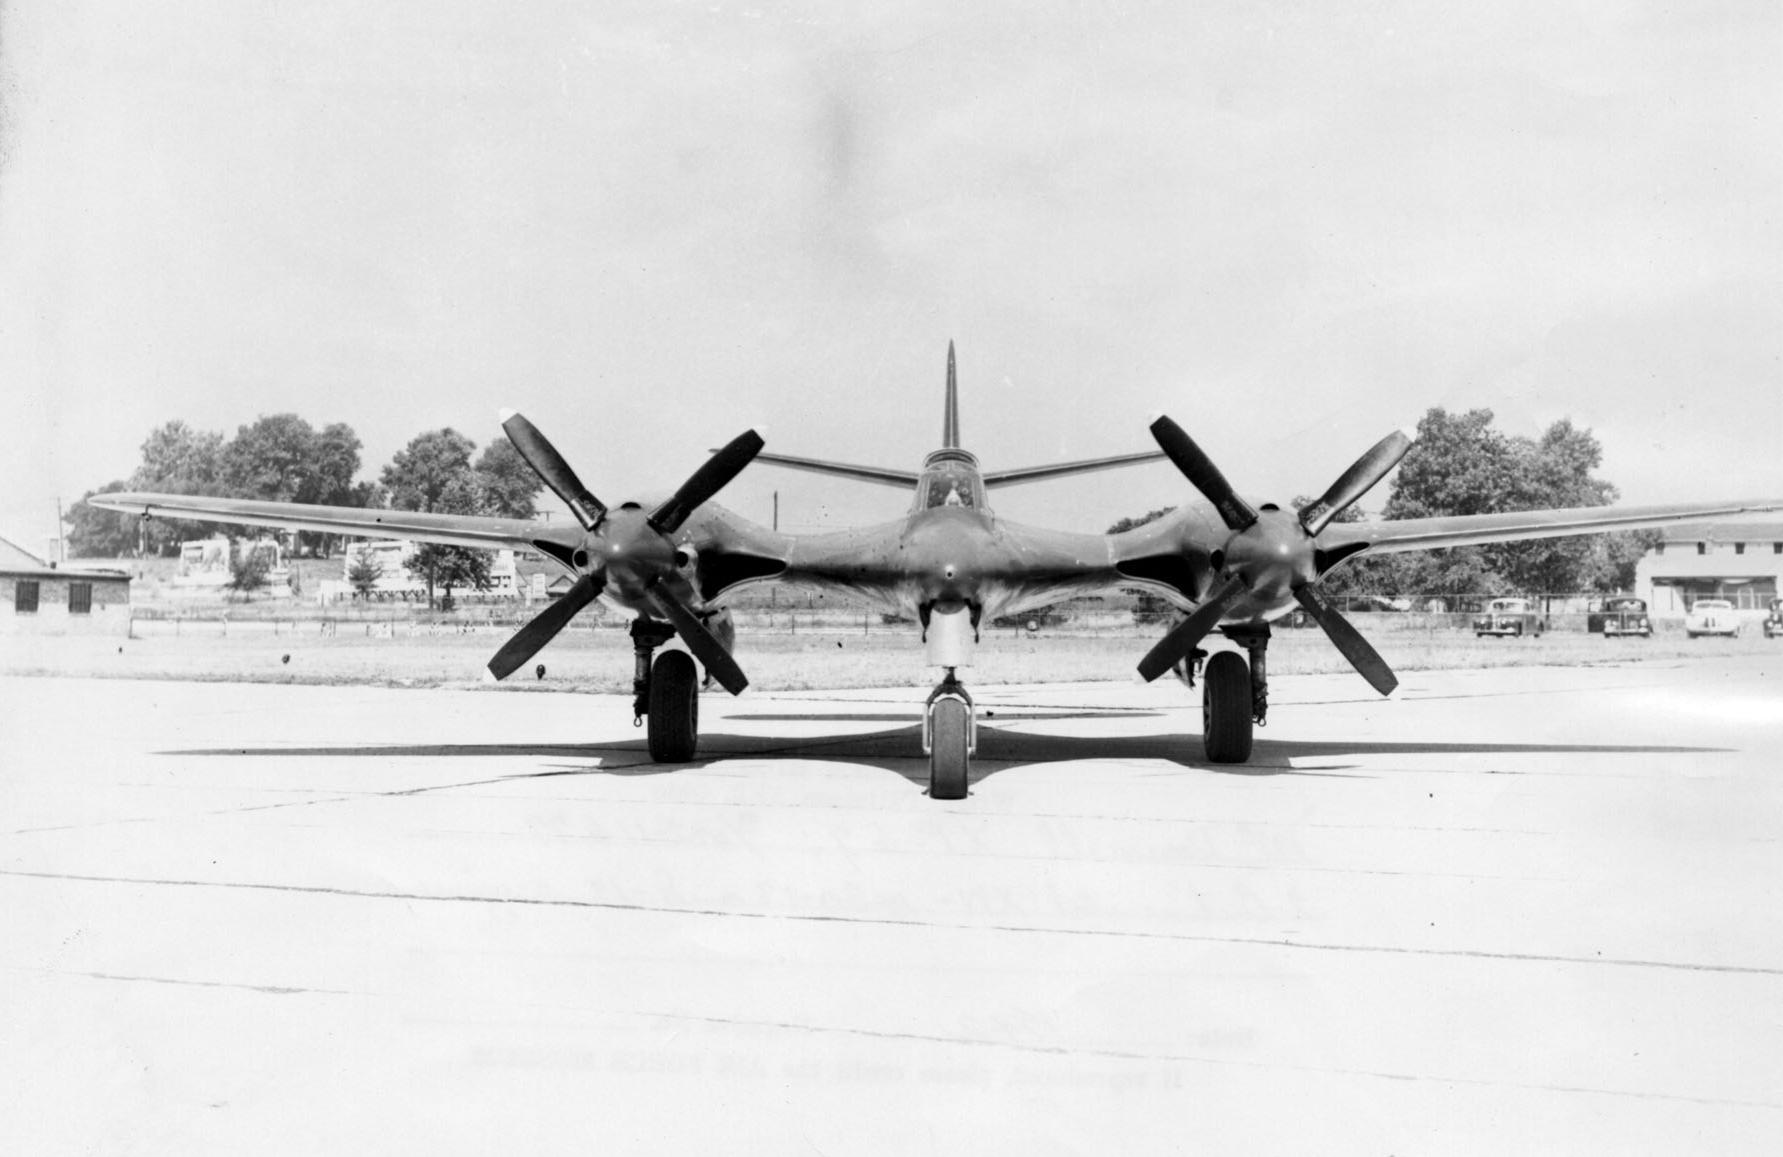 McDonnell XP-67 Bat 